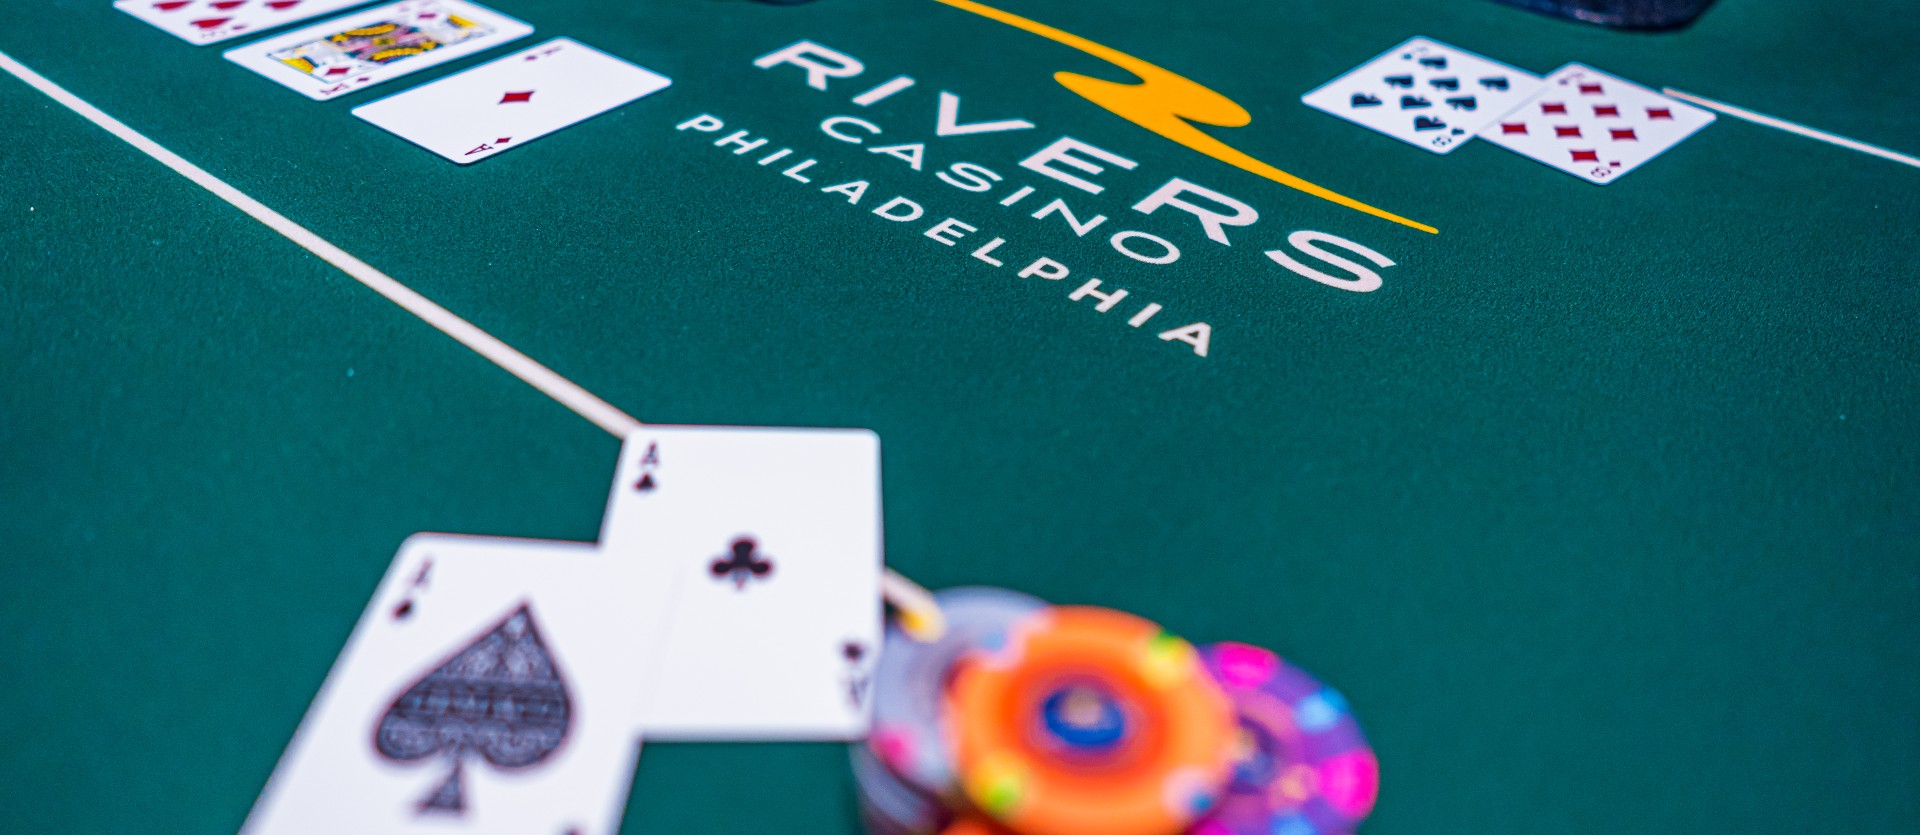 Rivers Casino Philadelphia Plans Selamat Datang Kembali Turnamen Poker